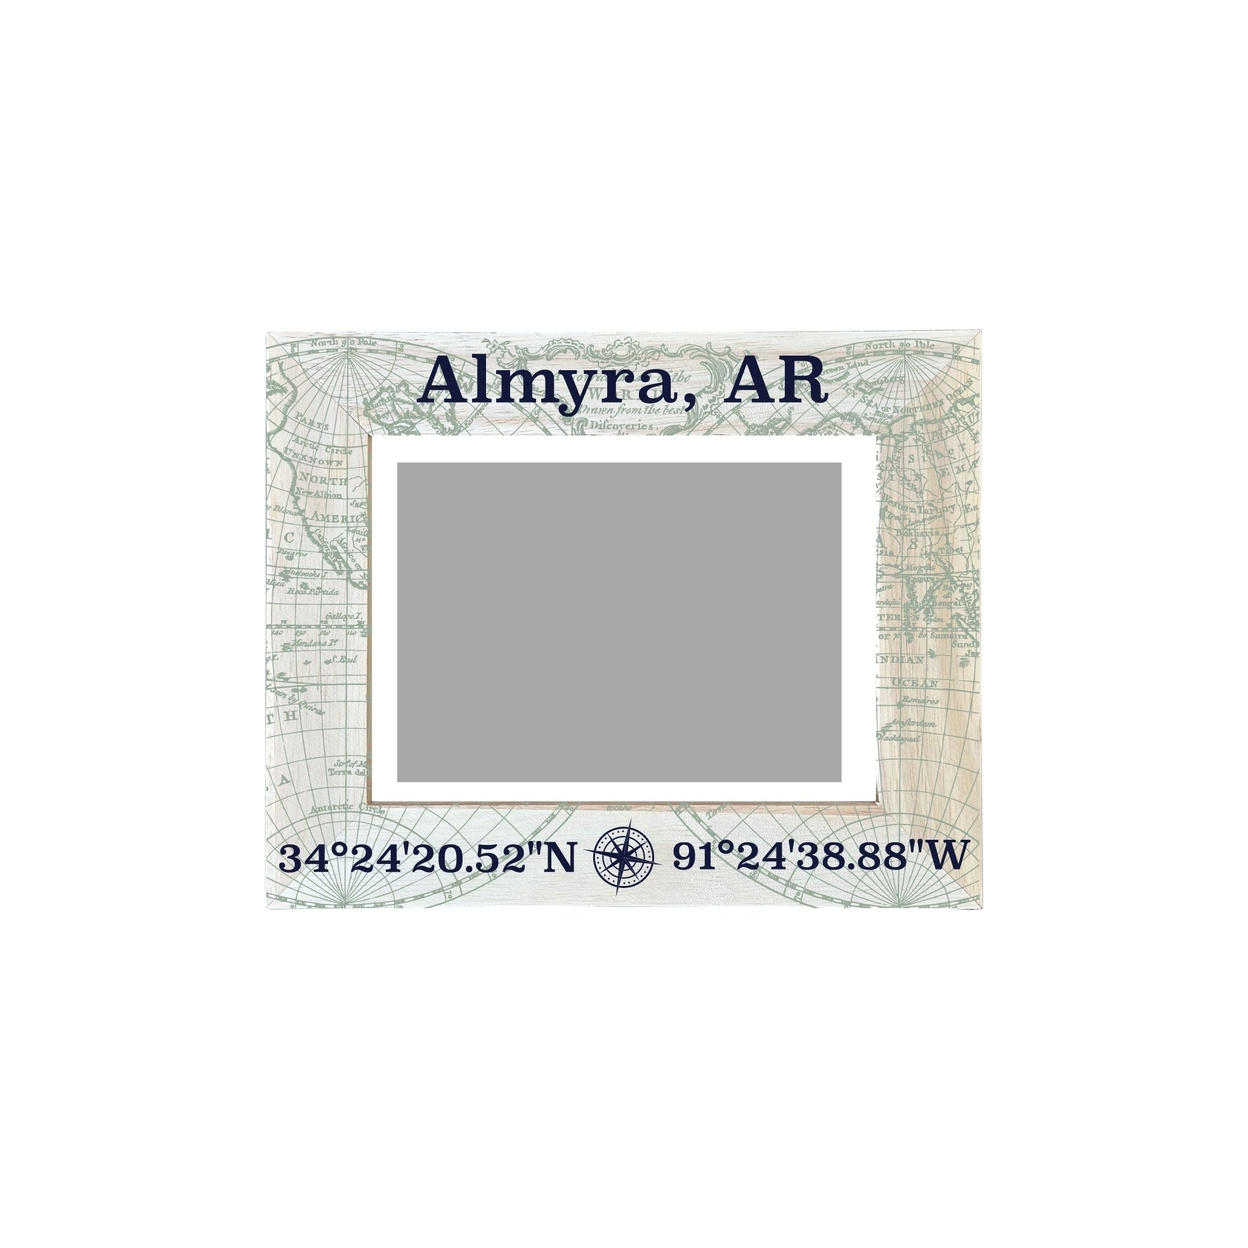 Almyra Arkansas Souvenir Wooden Photo Frame Compass Coordinates Design Matted To 4 X 6